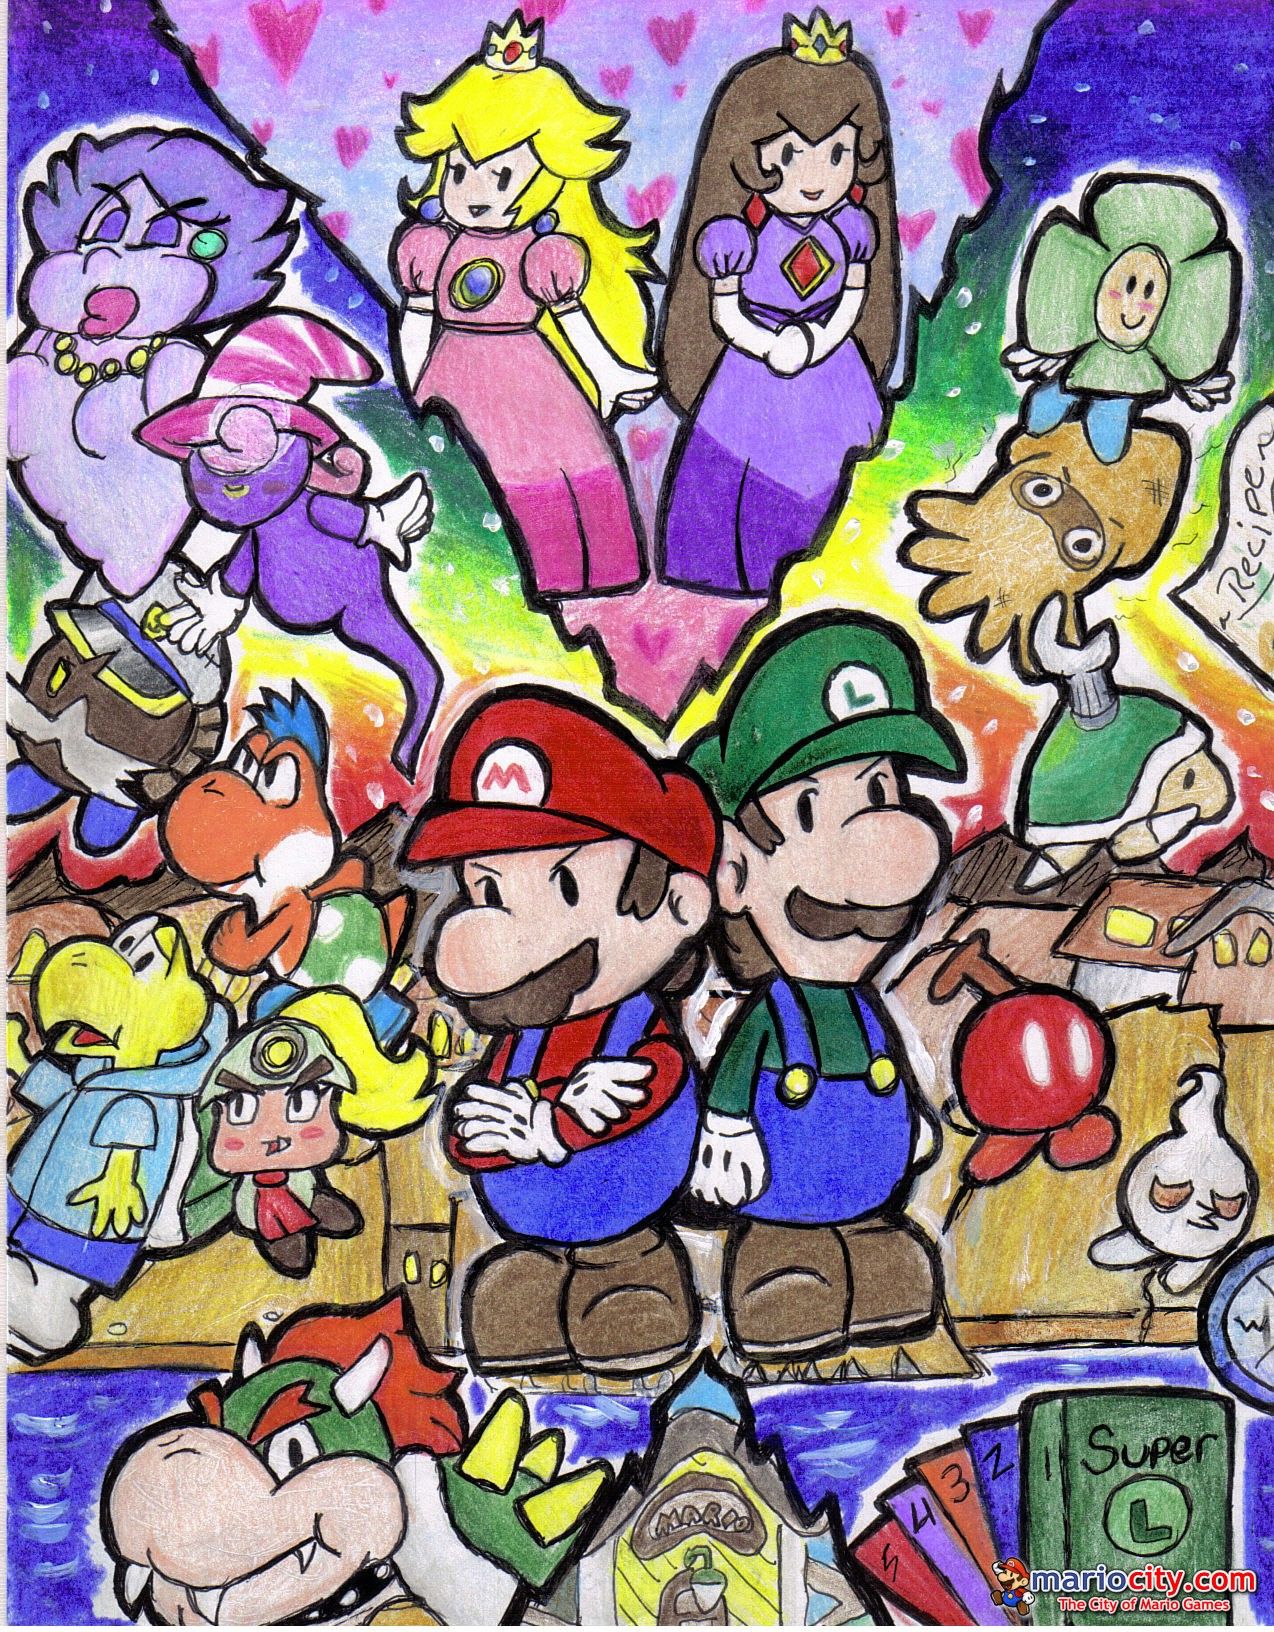 A Super Mario Bros Wallpaper